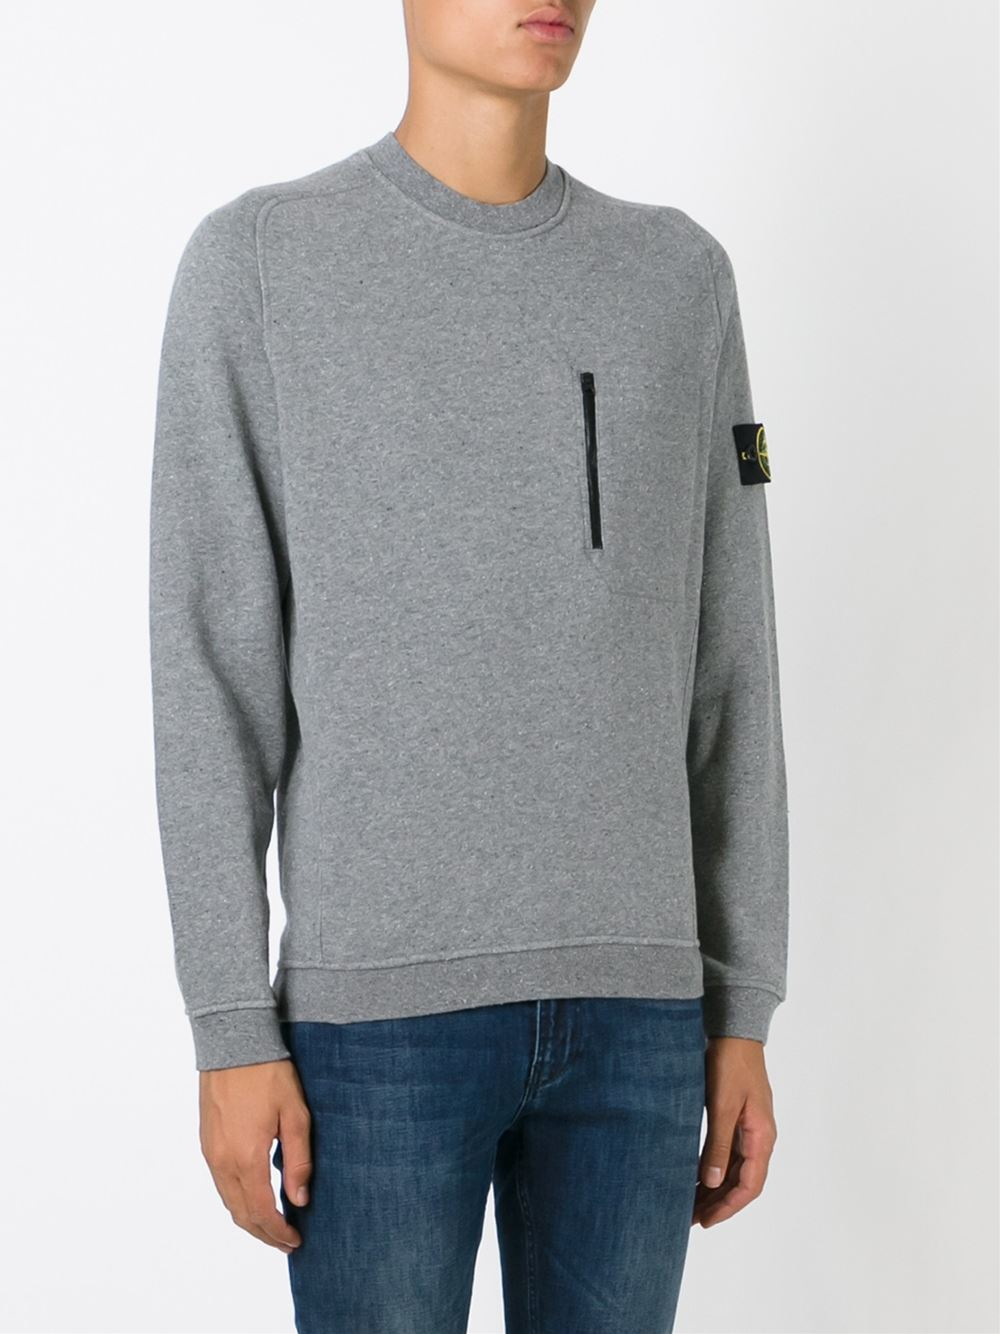 Stone Island Zip Chest Pocket Sweatshirt in Grey (Gray) for Men - Lyst